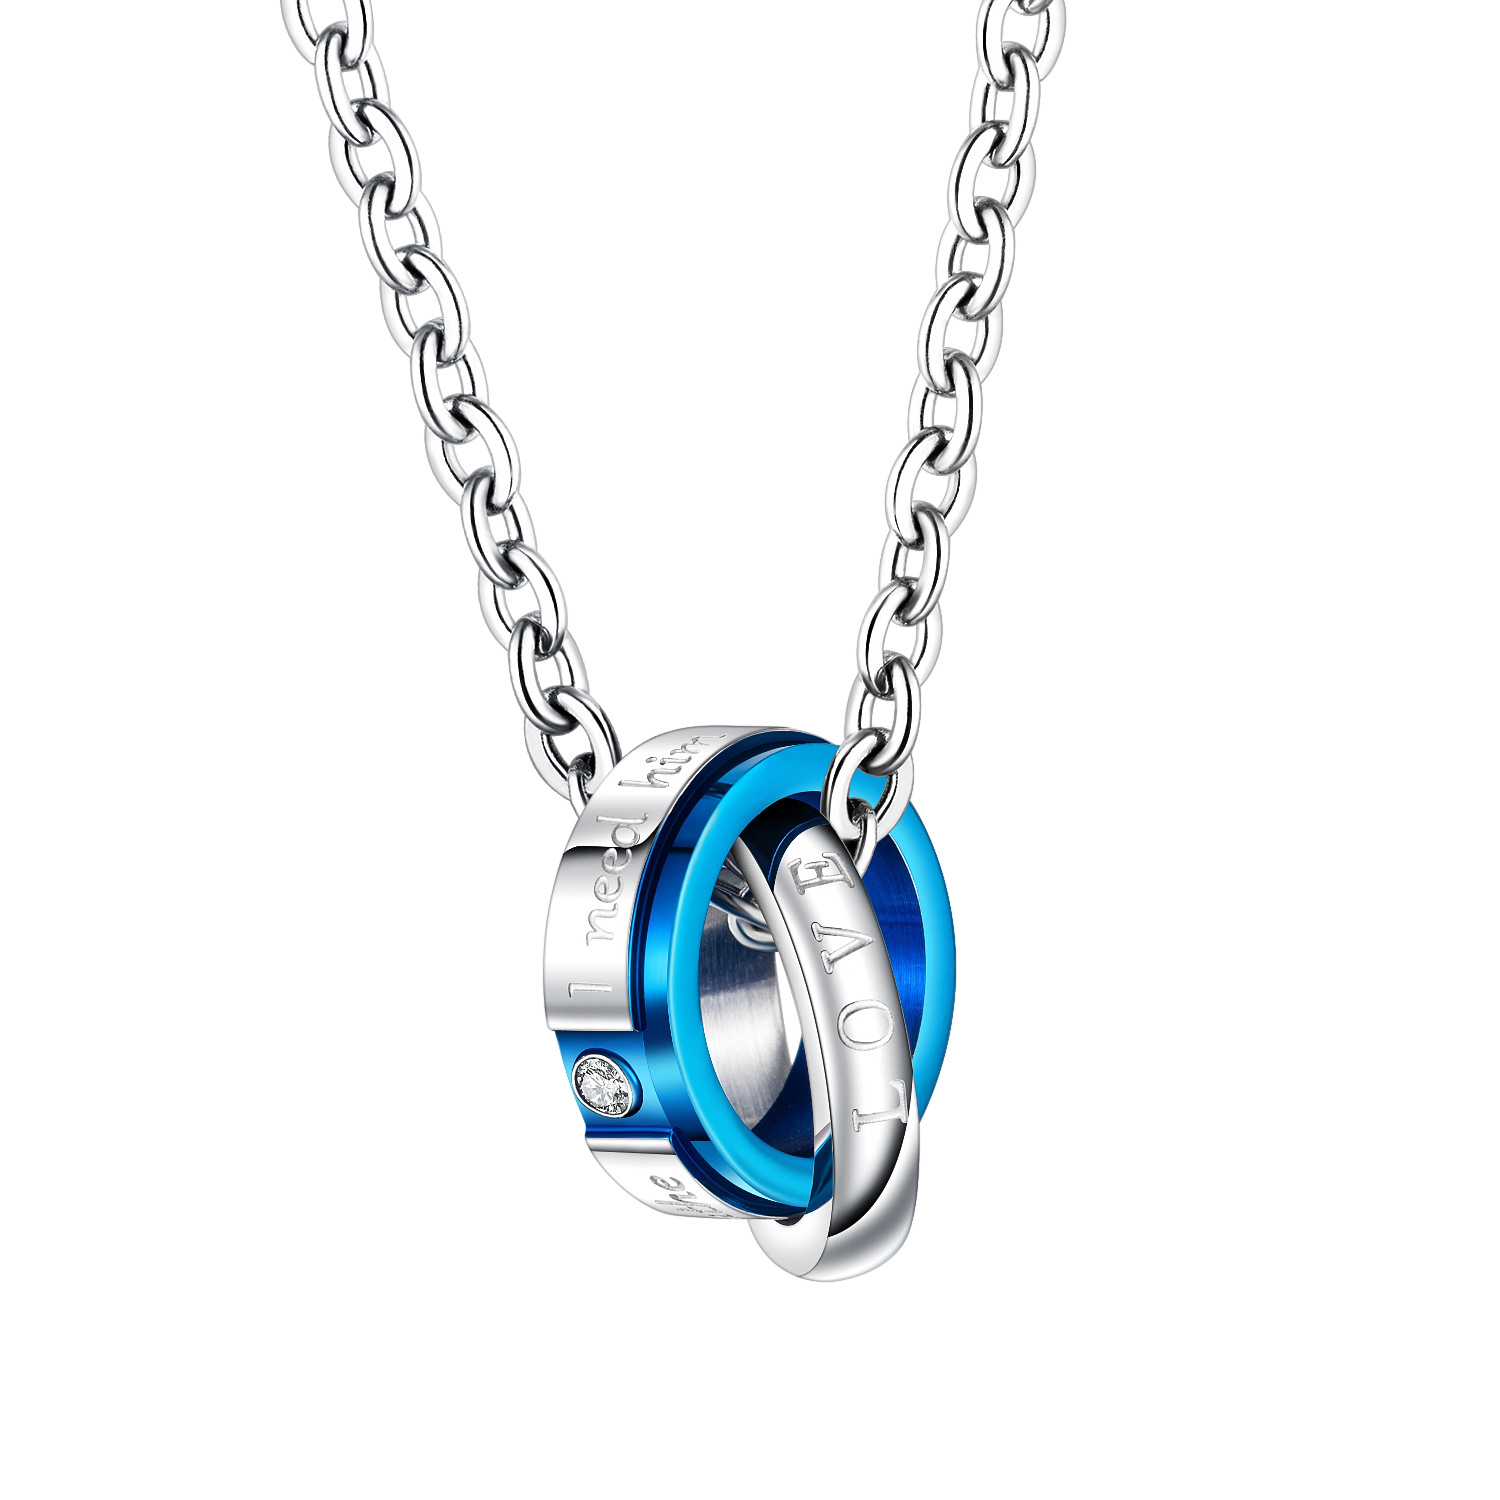 Blue men's model (single pendant, without matching